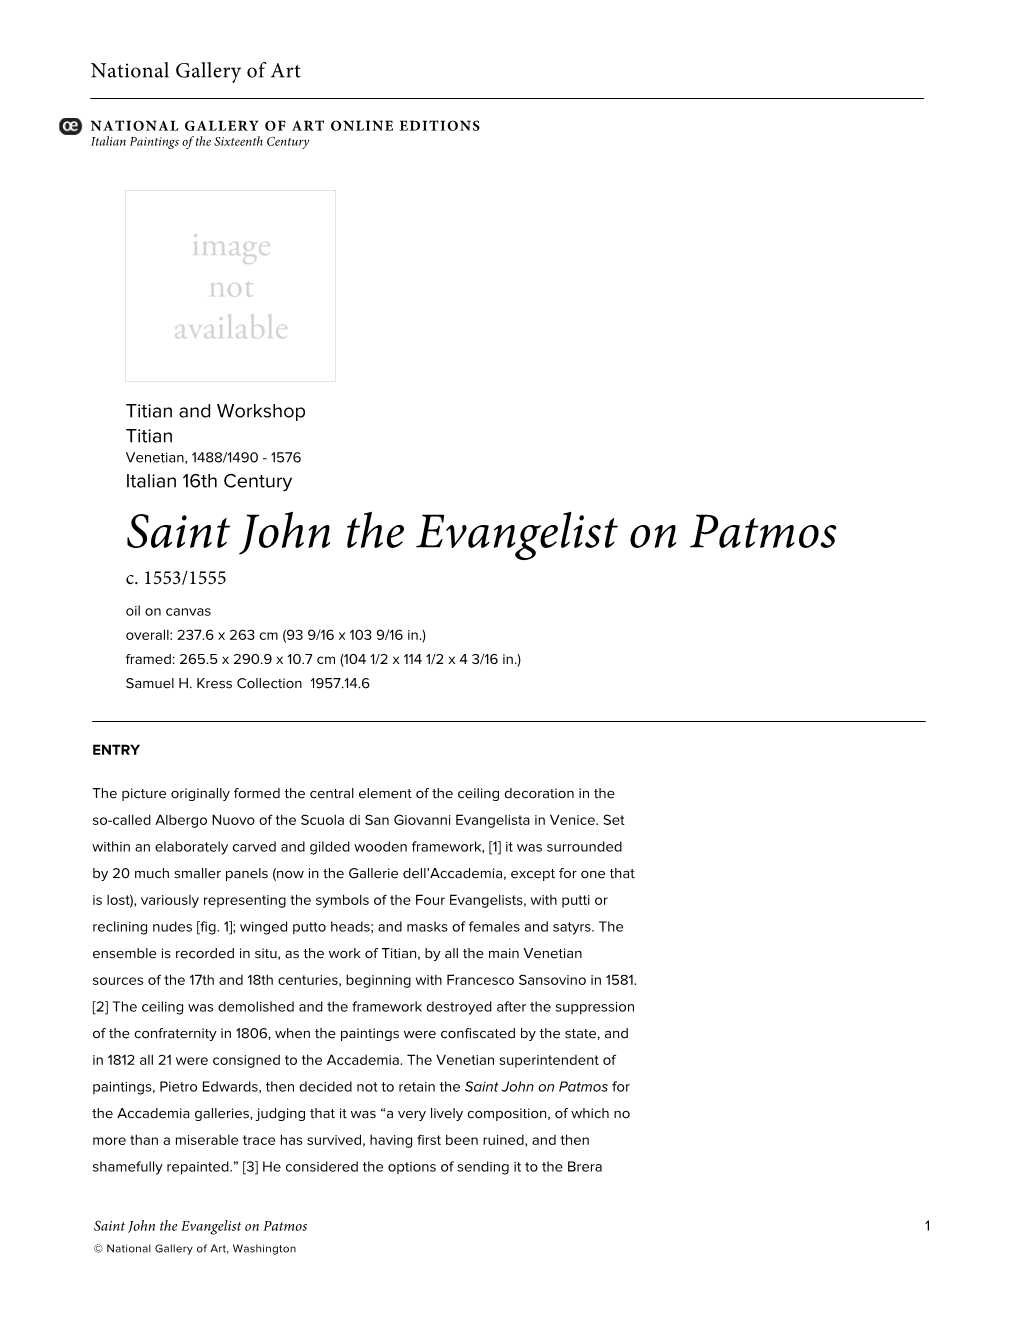 Saint John the Evangelist on Patmos C